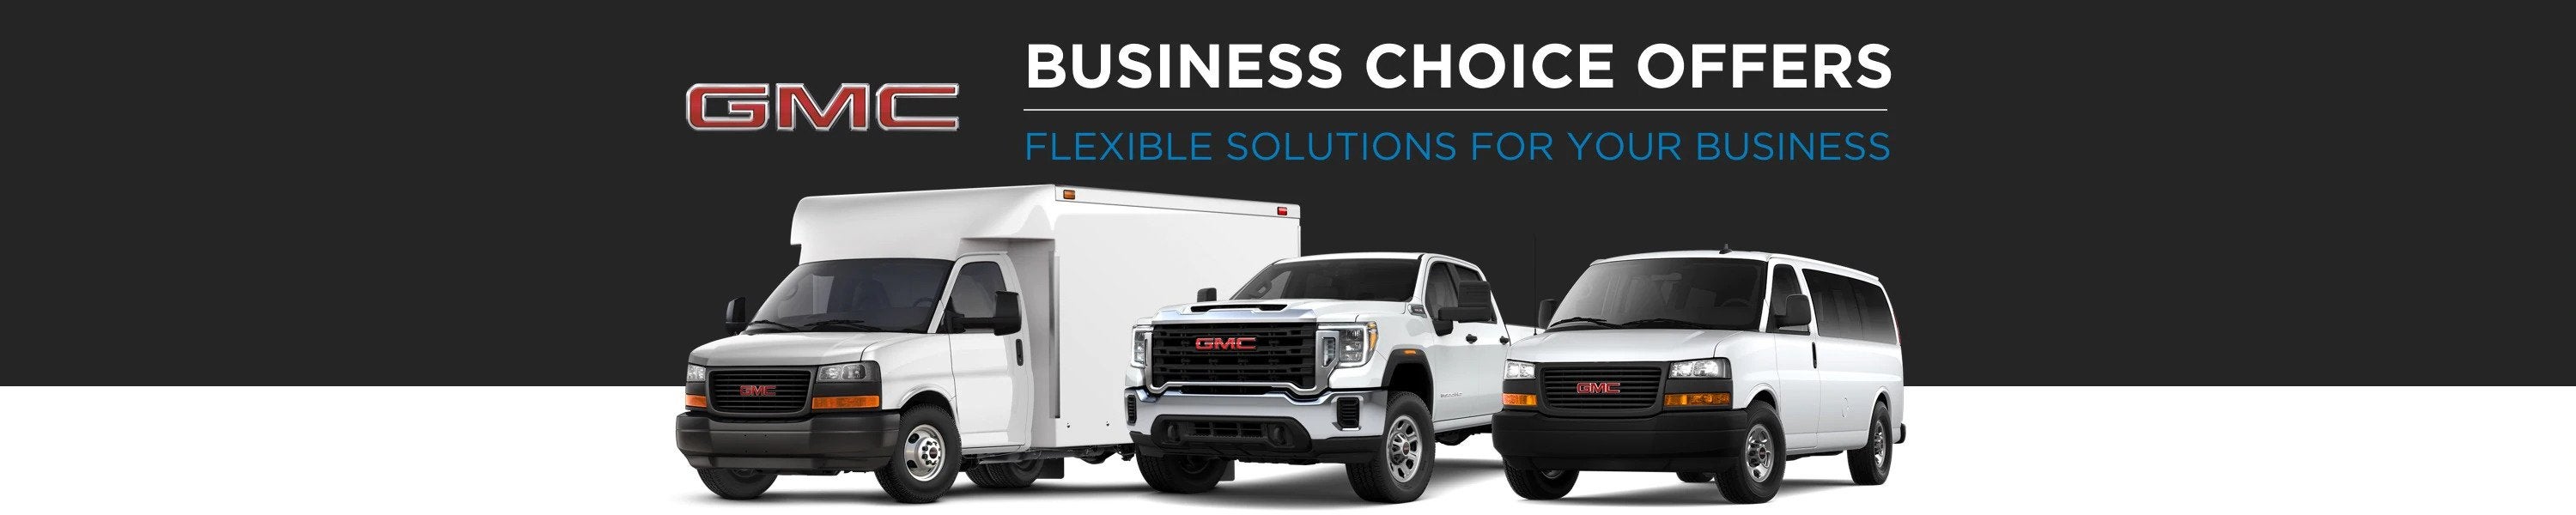 GMC Business Choice Offers - Flexible Solutions for your Business - Koons Buick GMC Woodbridge in Woodbridge VA